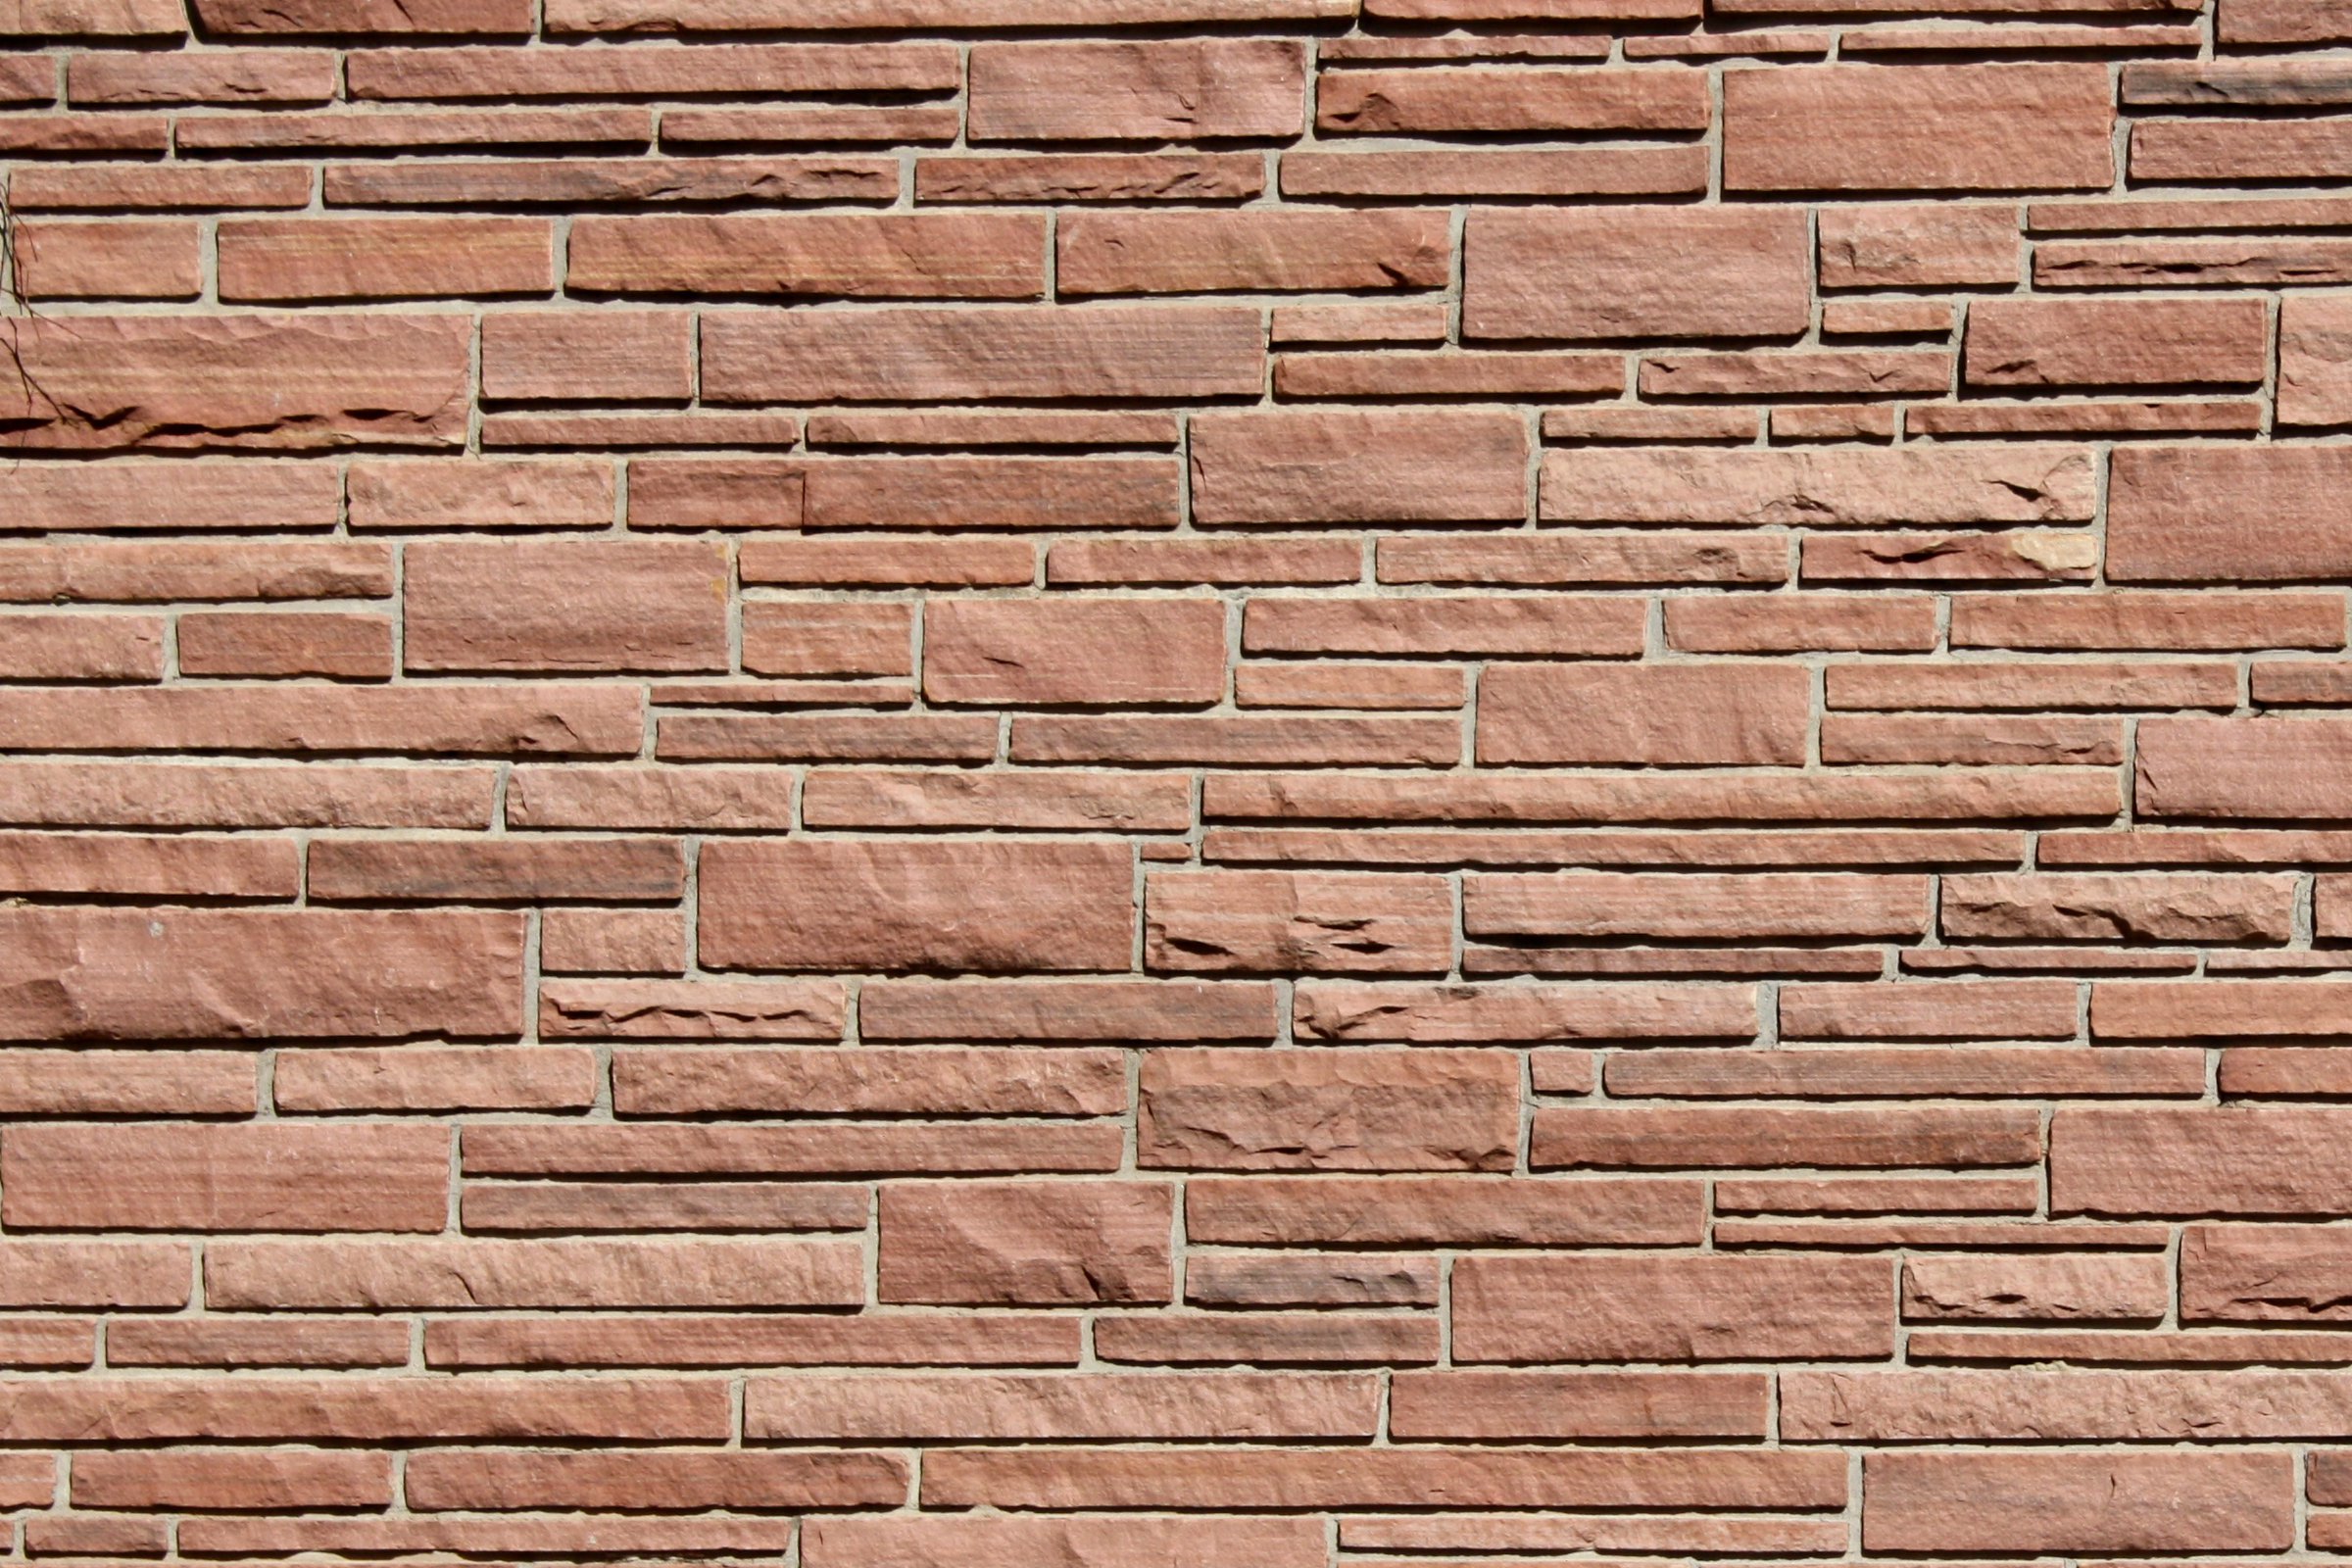 Sandstone Brick Wall Texture Picture Free Photograph Photos Public